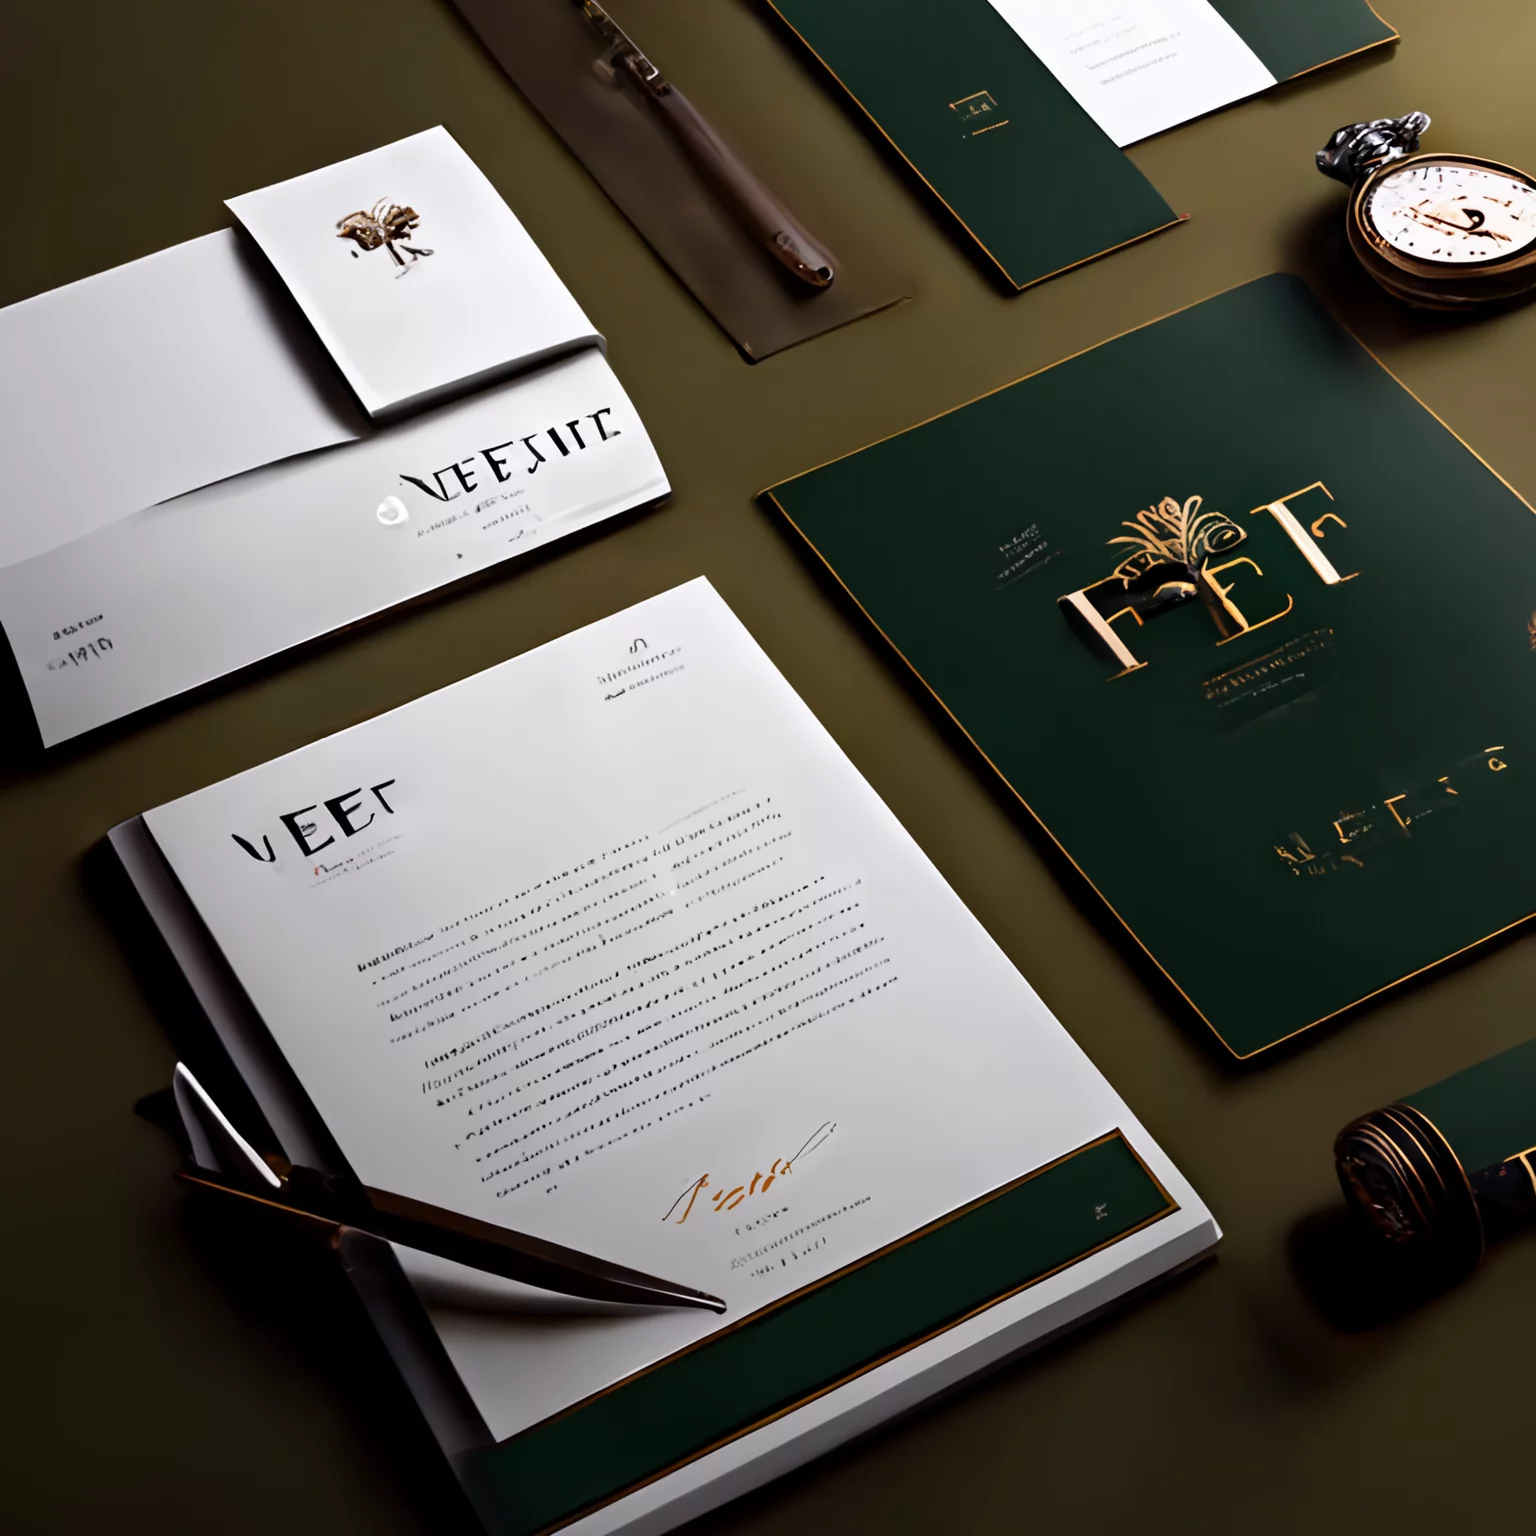 Neff-group legal services logo